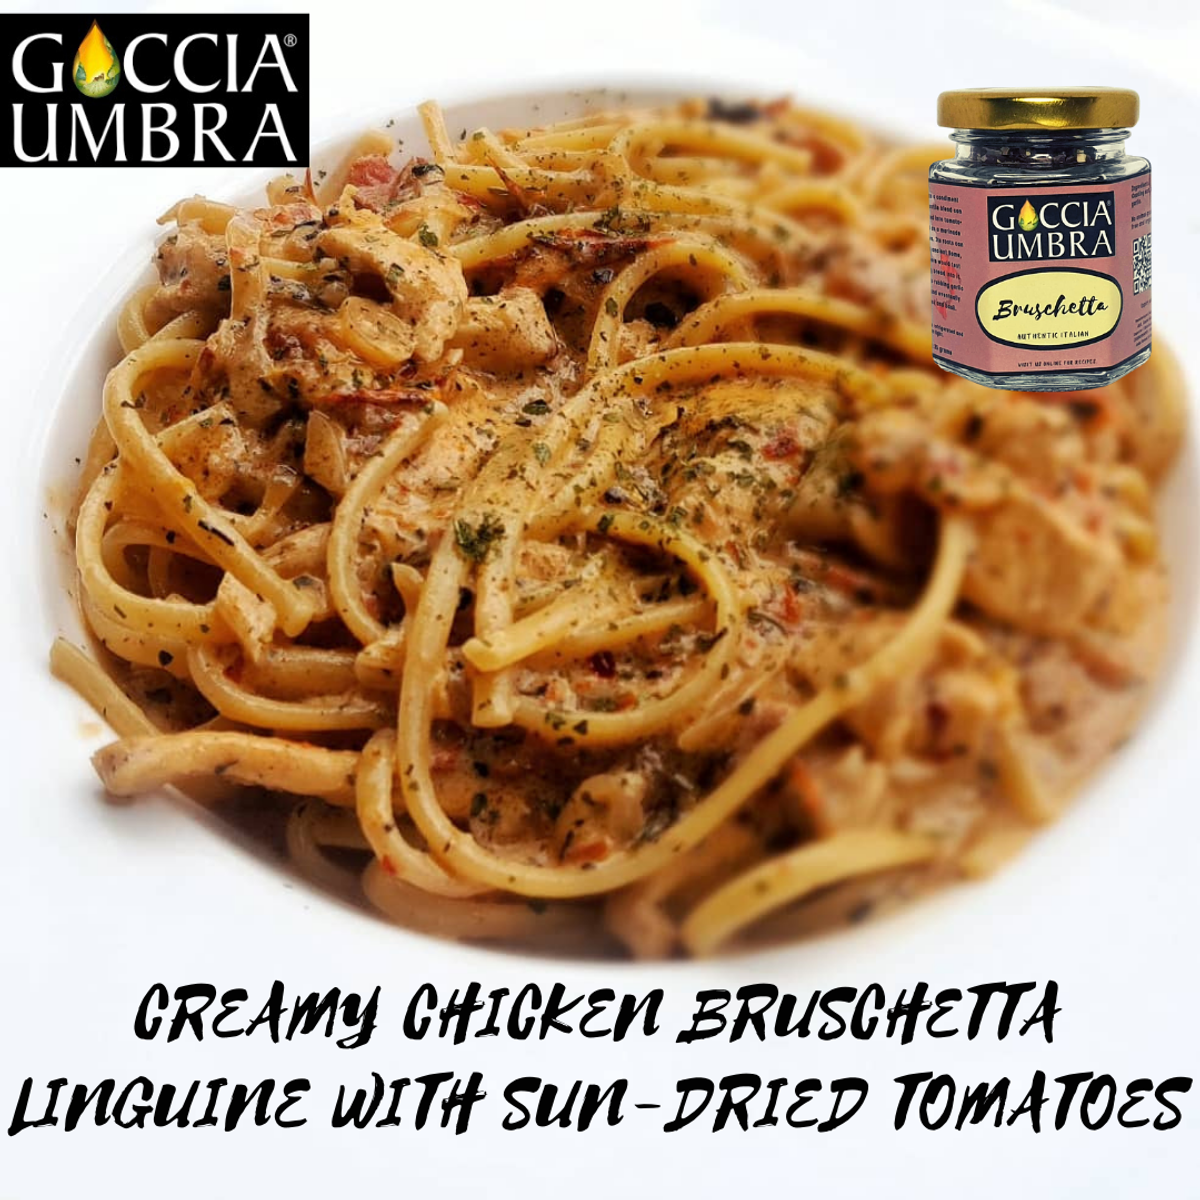 Creamy chicken bruschetta linguine with sun-dried tomatoes (serves 4)